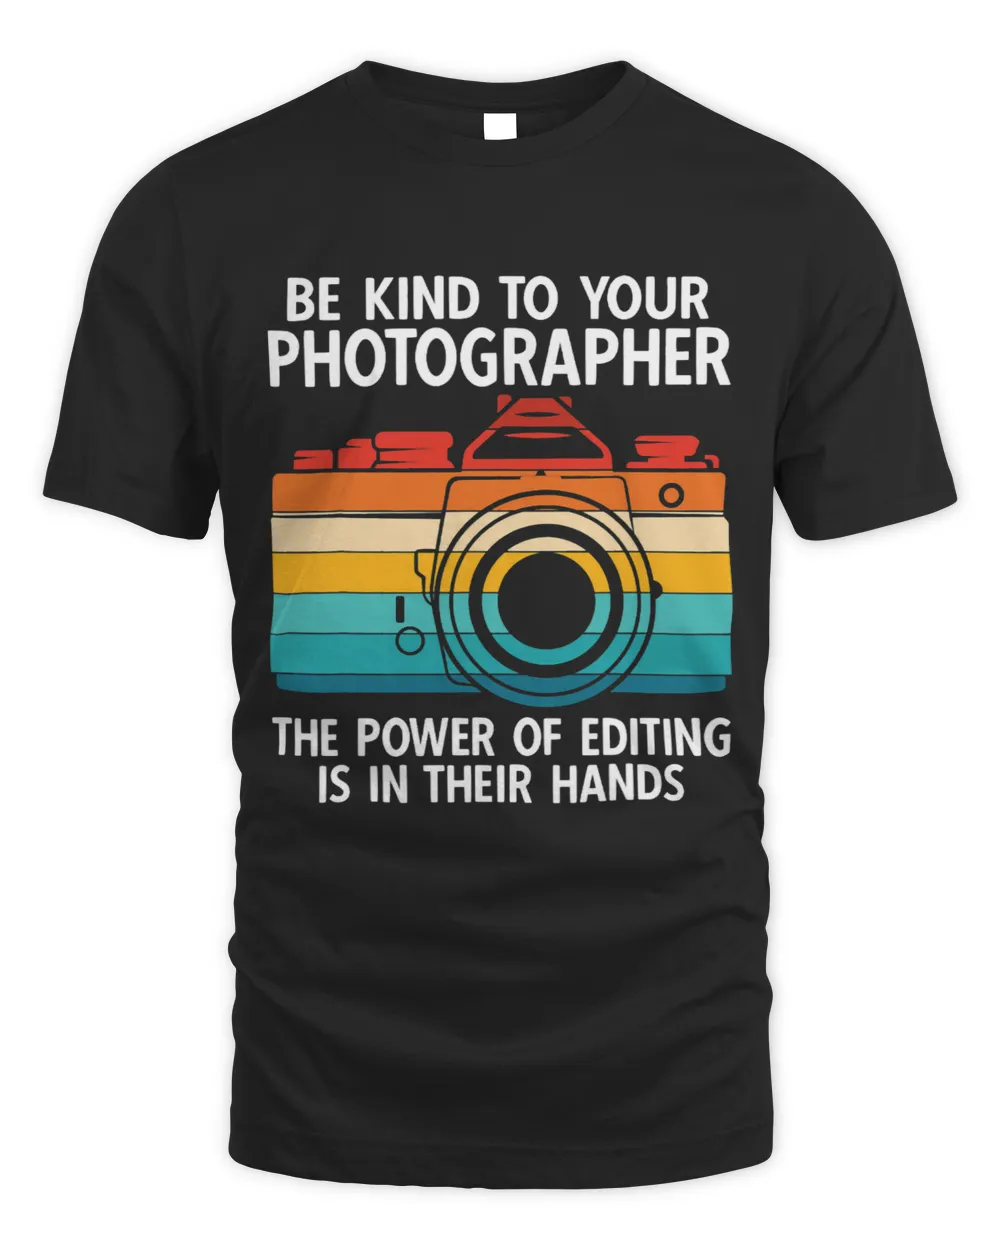 Photographist Photographer 28